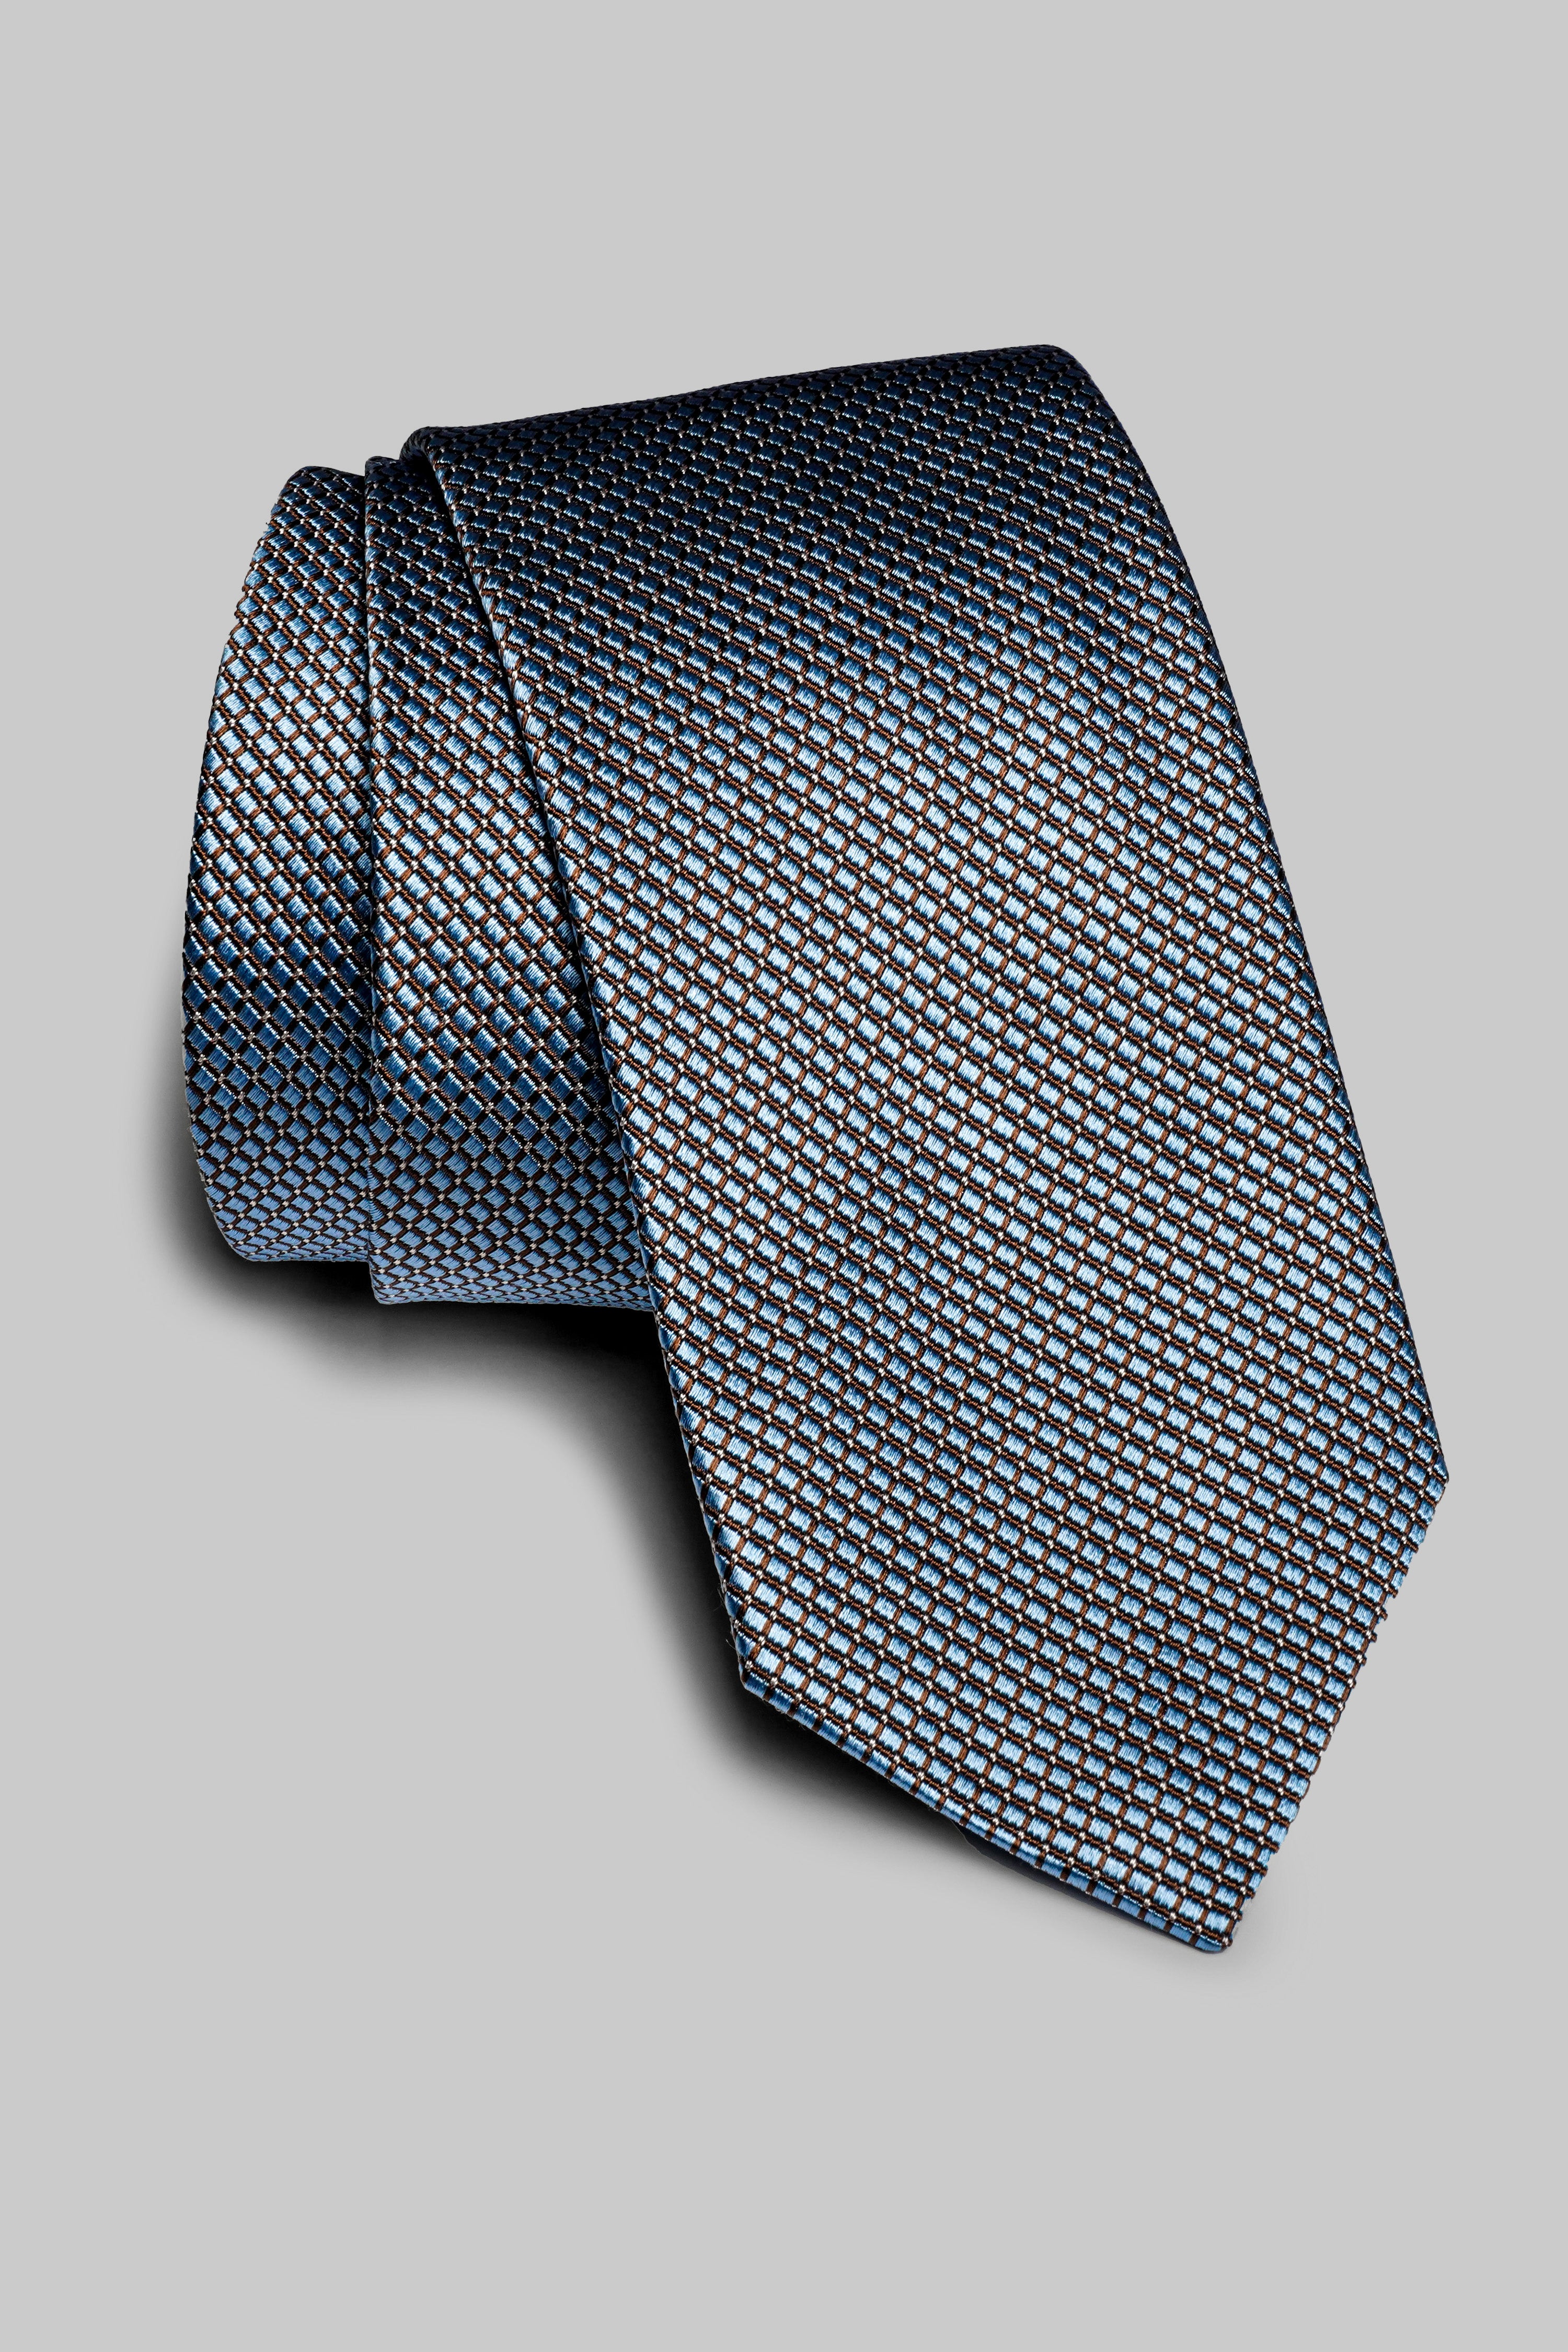 Vue alternative Sherbrooke cravate en soie en bleu ciel